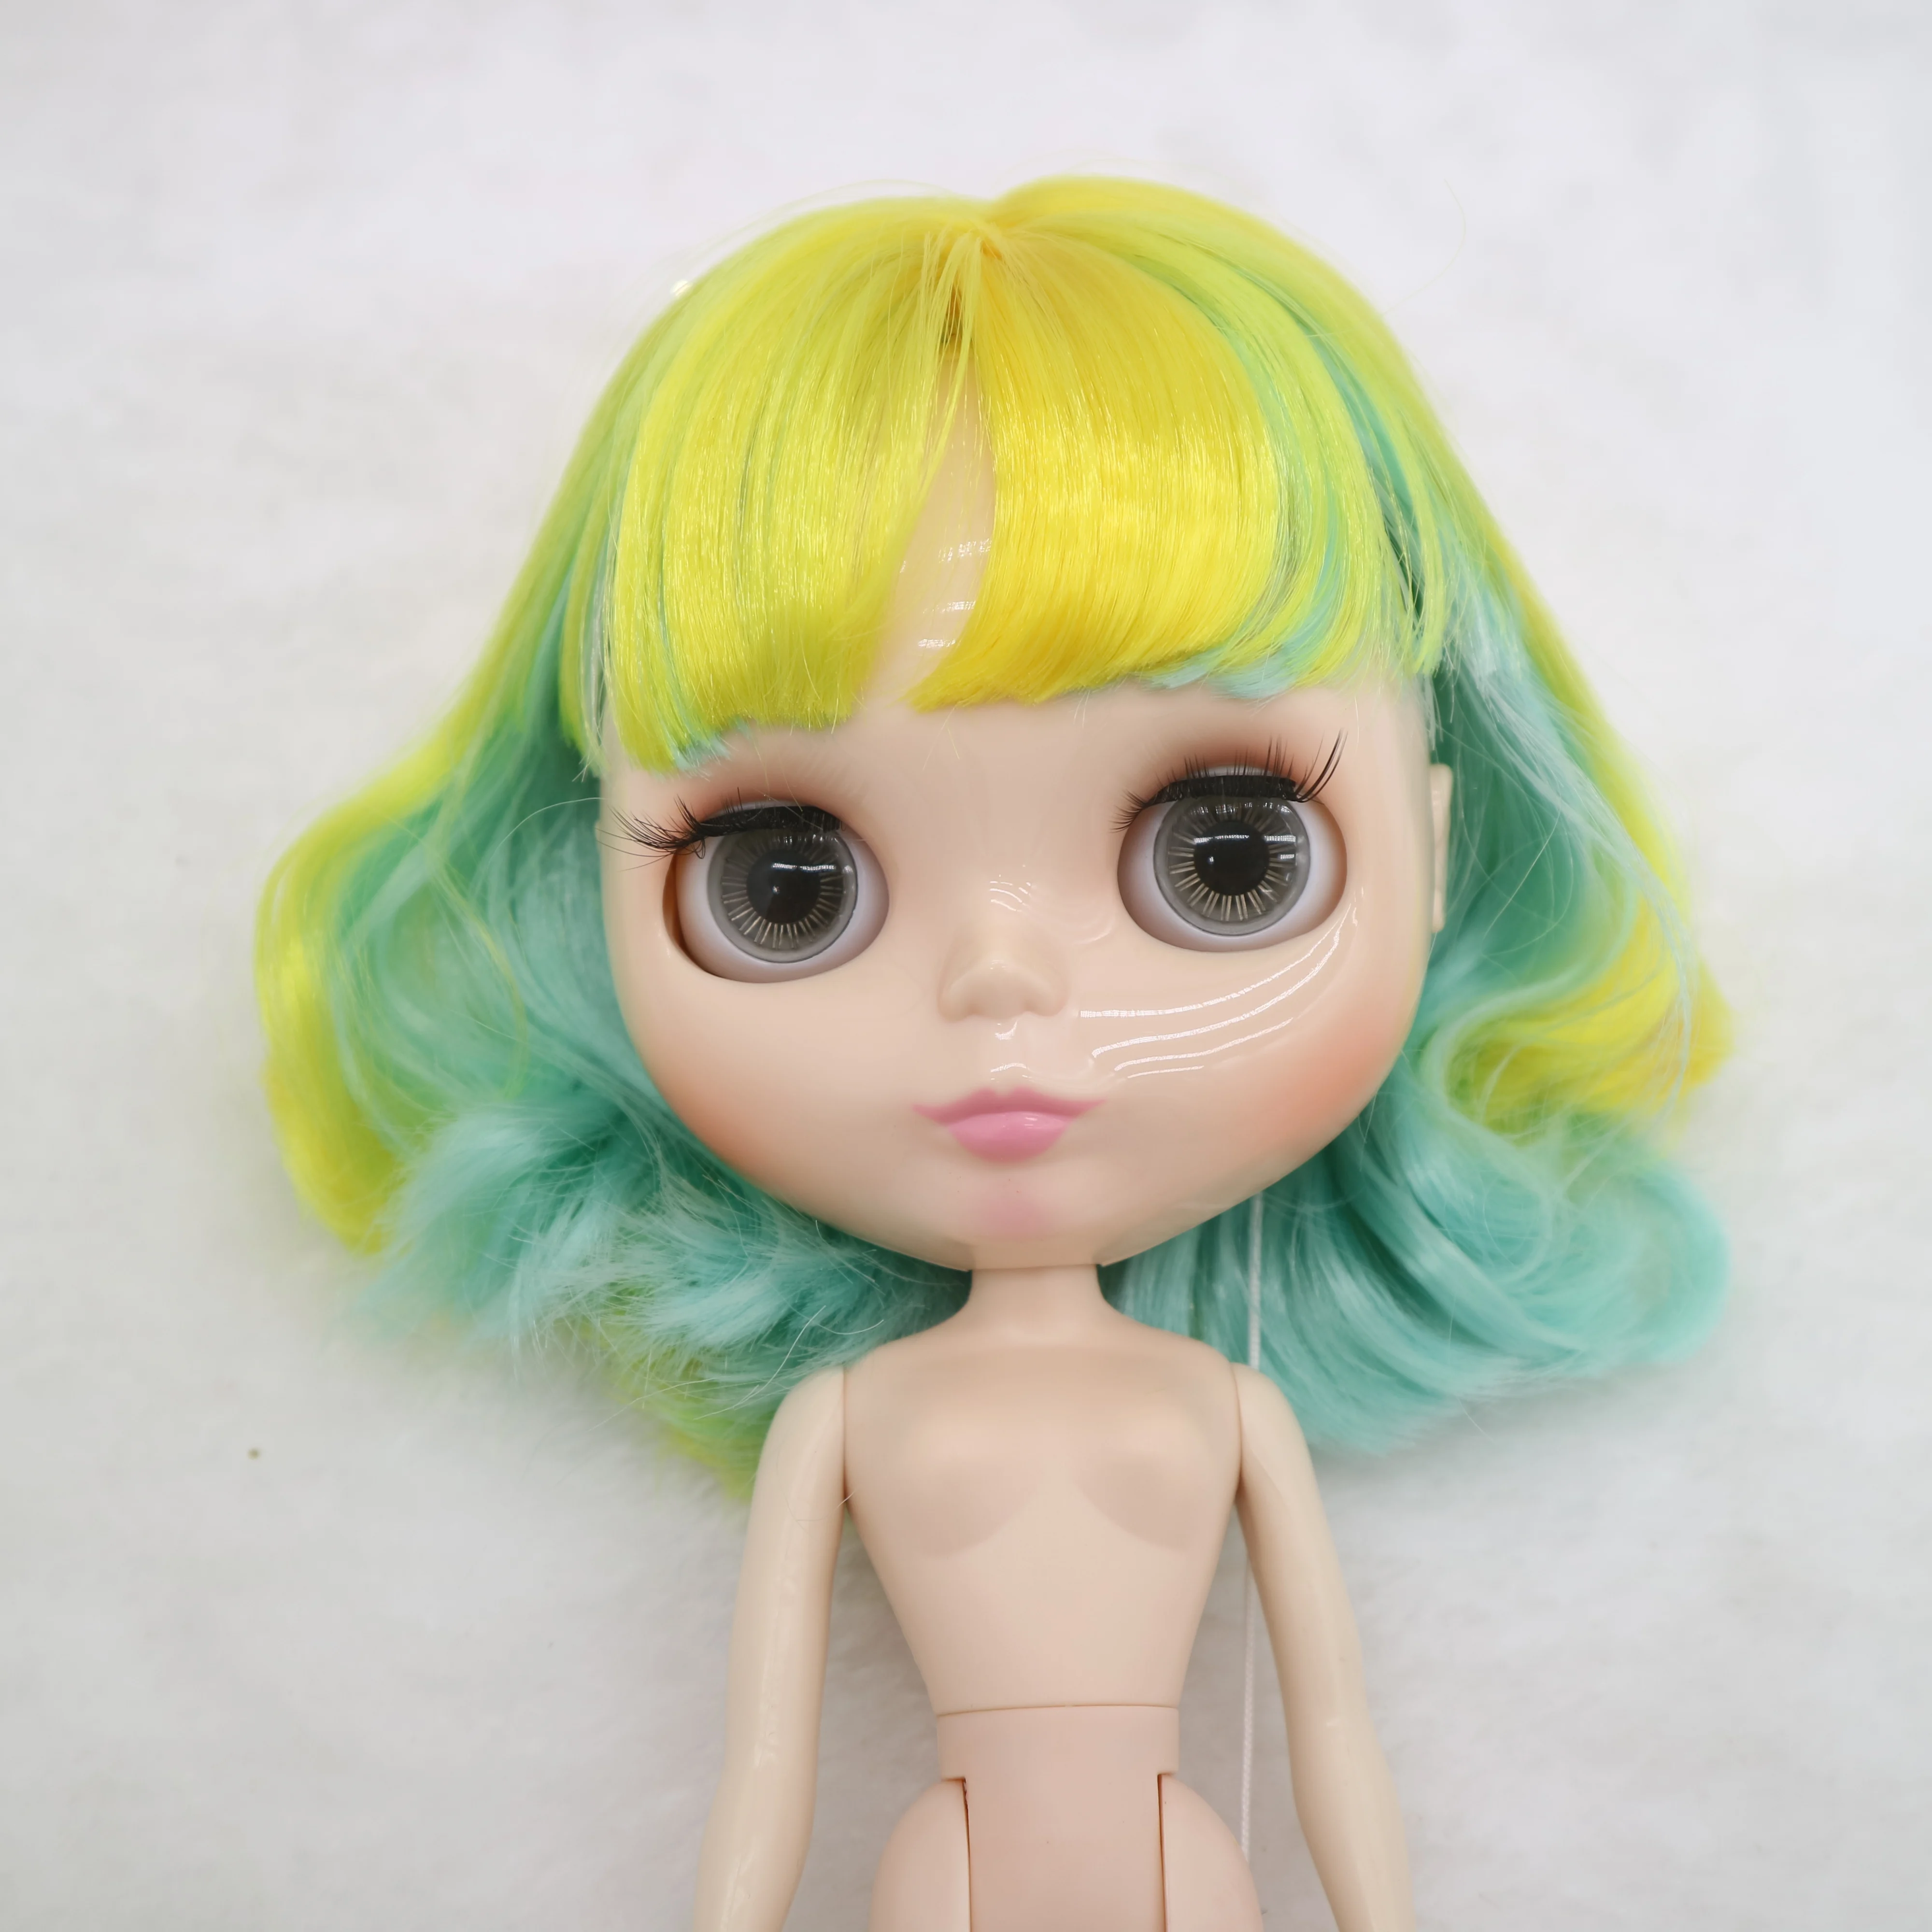 Blyth בובה עם קצר לערבב את השיער(ירוק ,צהוב)